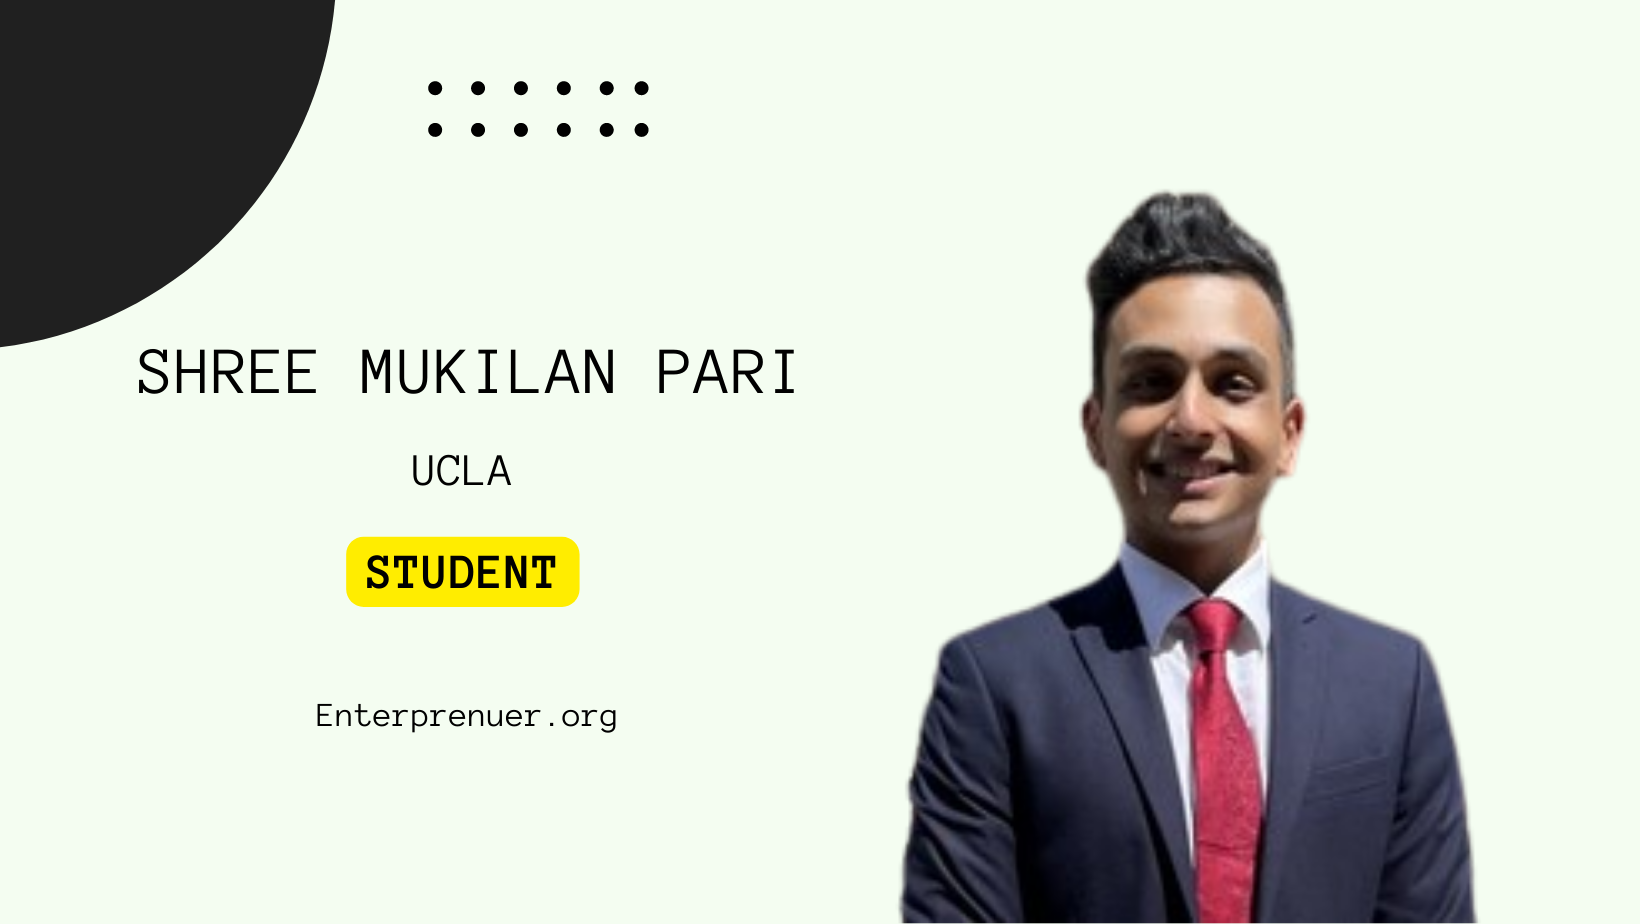 Shree Mukilan Pari Student at UCLA